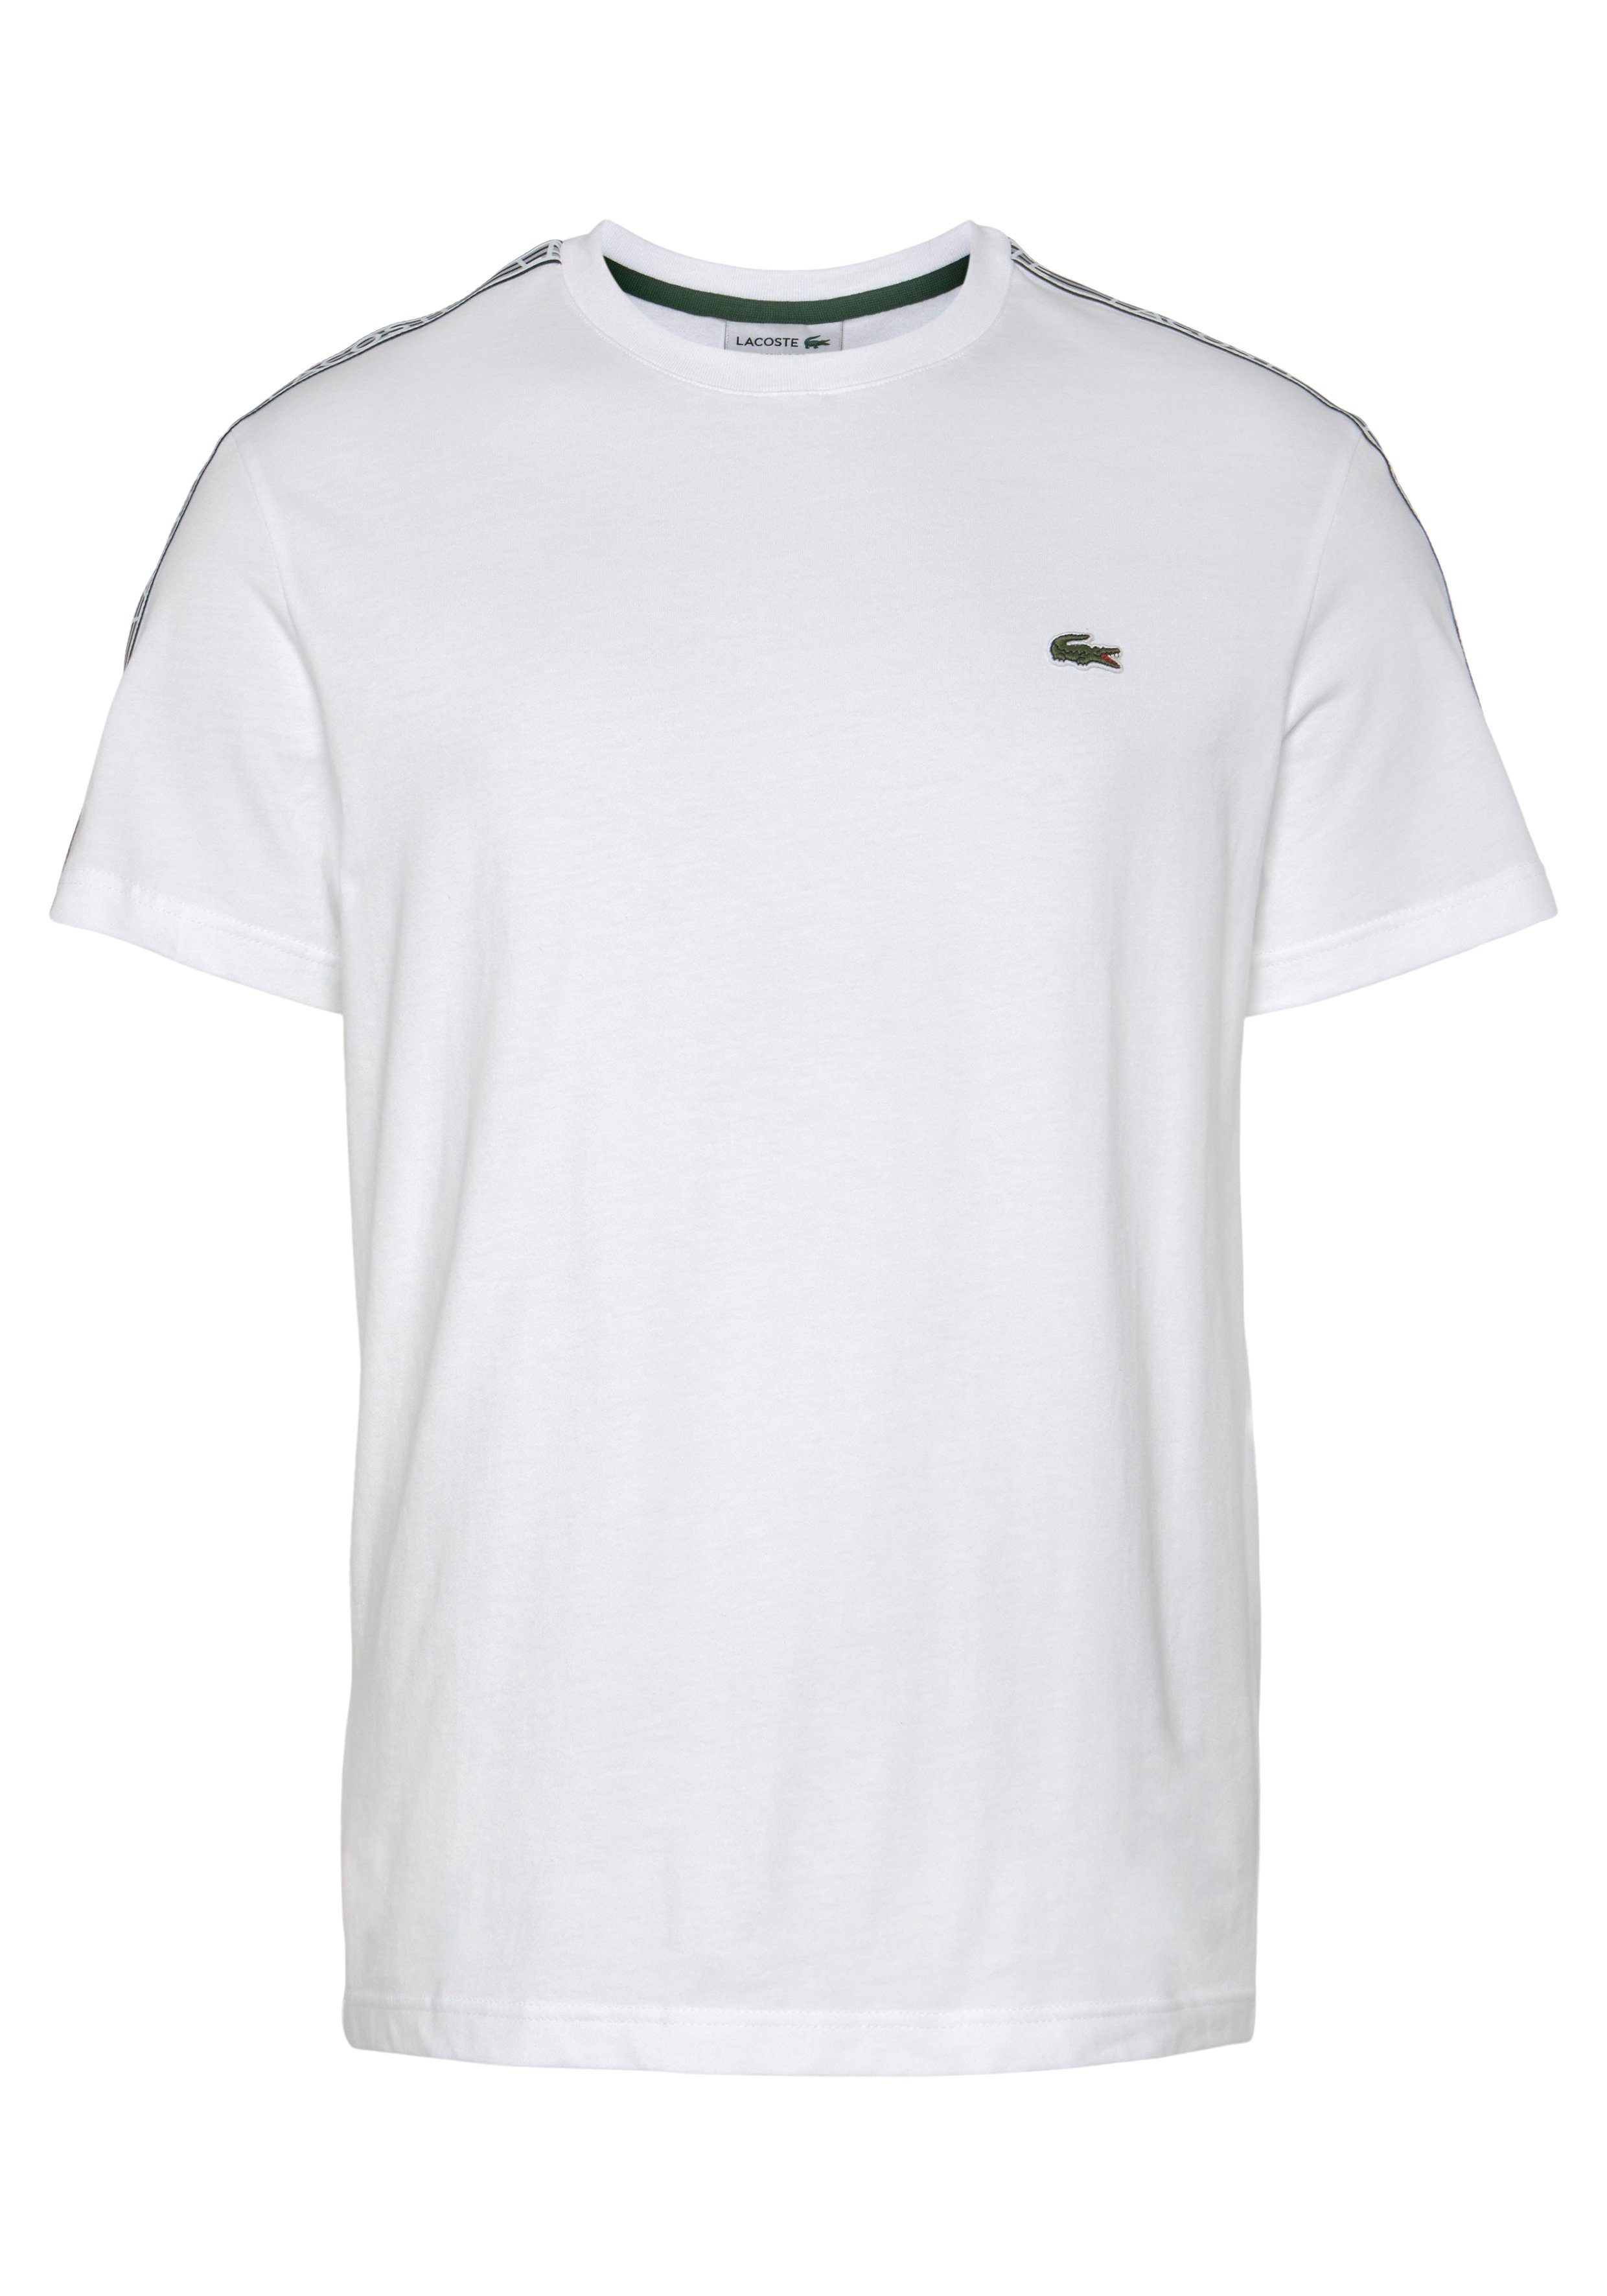 Lacoste T-Shirt beschriftetem white an mit Schultern Kontrastband den